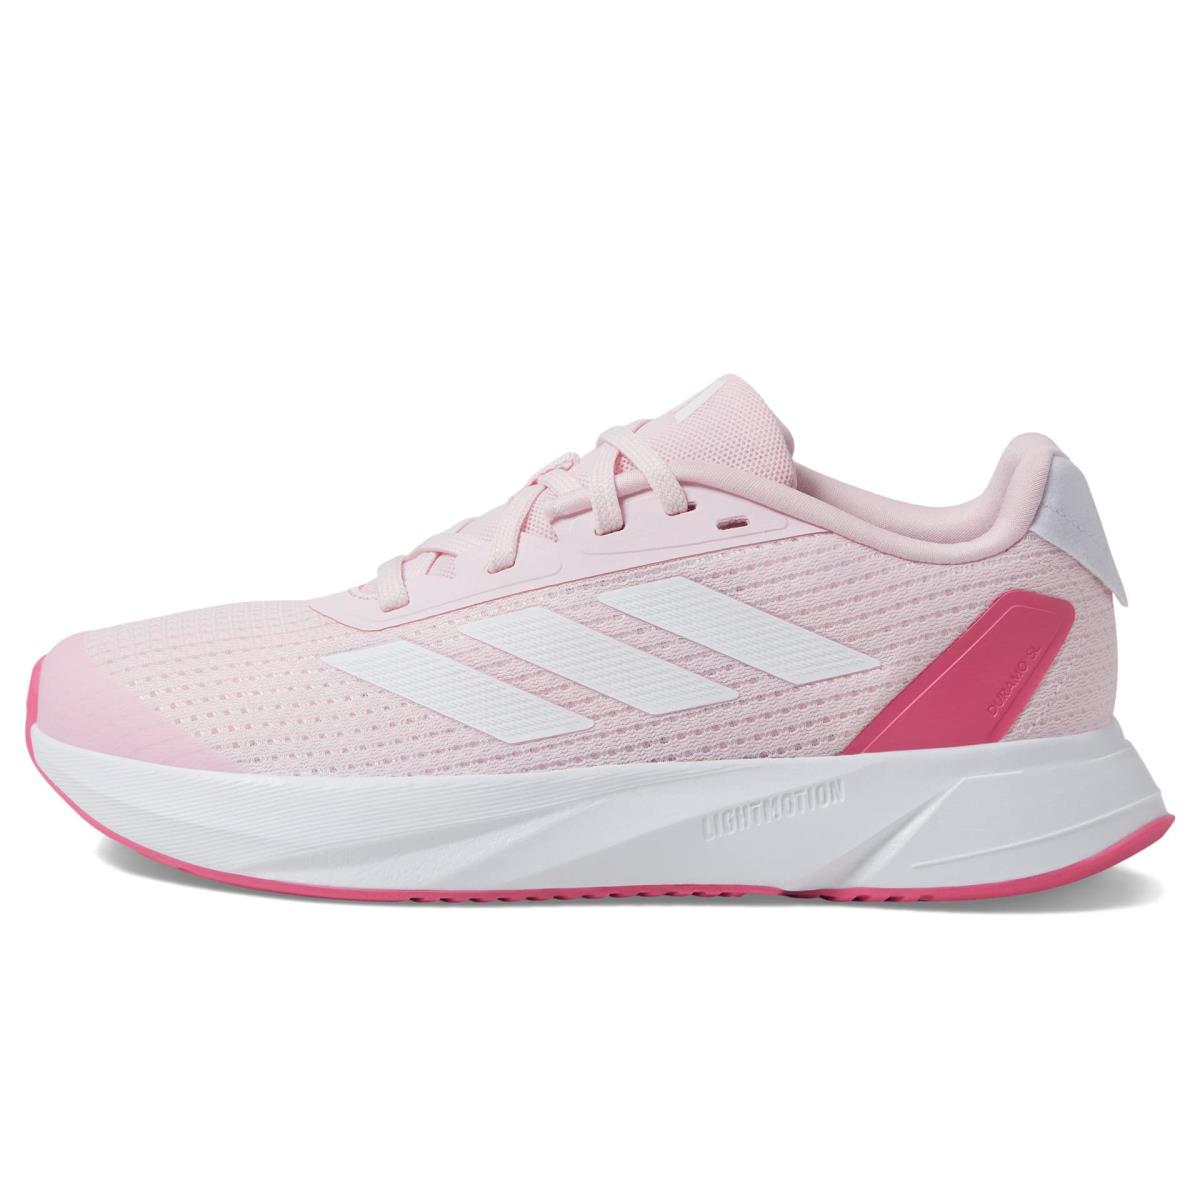 Adidas Unisex-child Duramo Sl Sneaker Clear Pink/White/Pink Fusion